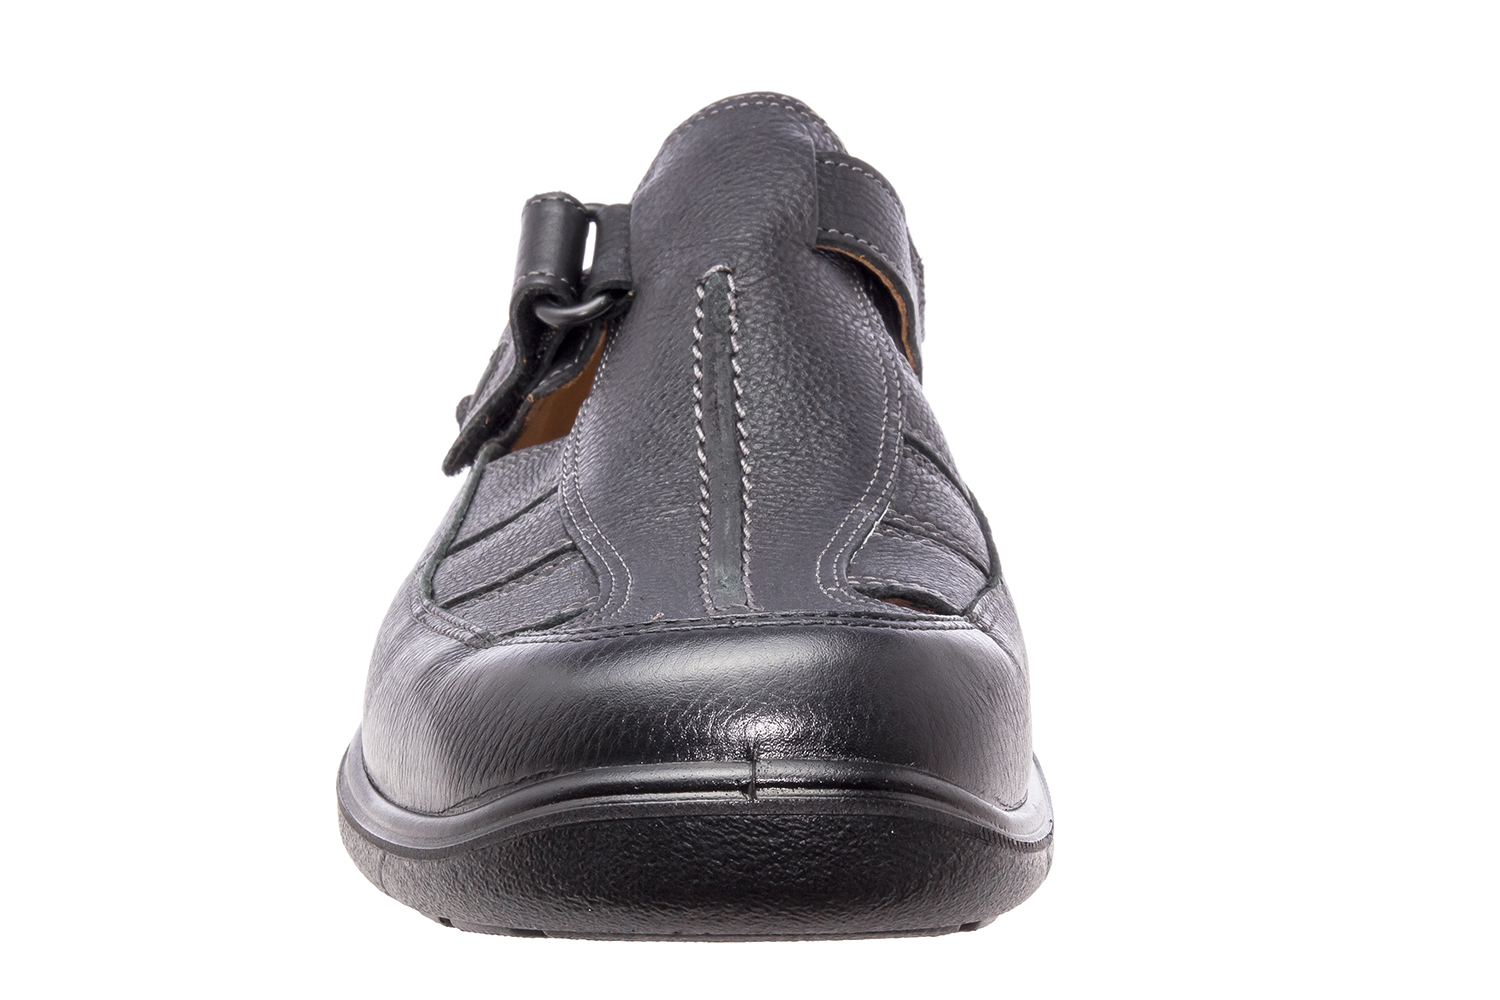 Mens Black Leather Shoes with velcro closure - Men's Shoes ...